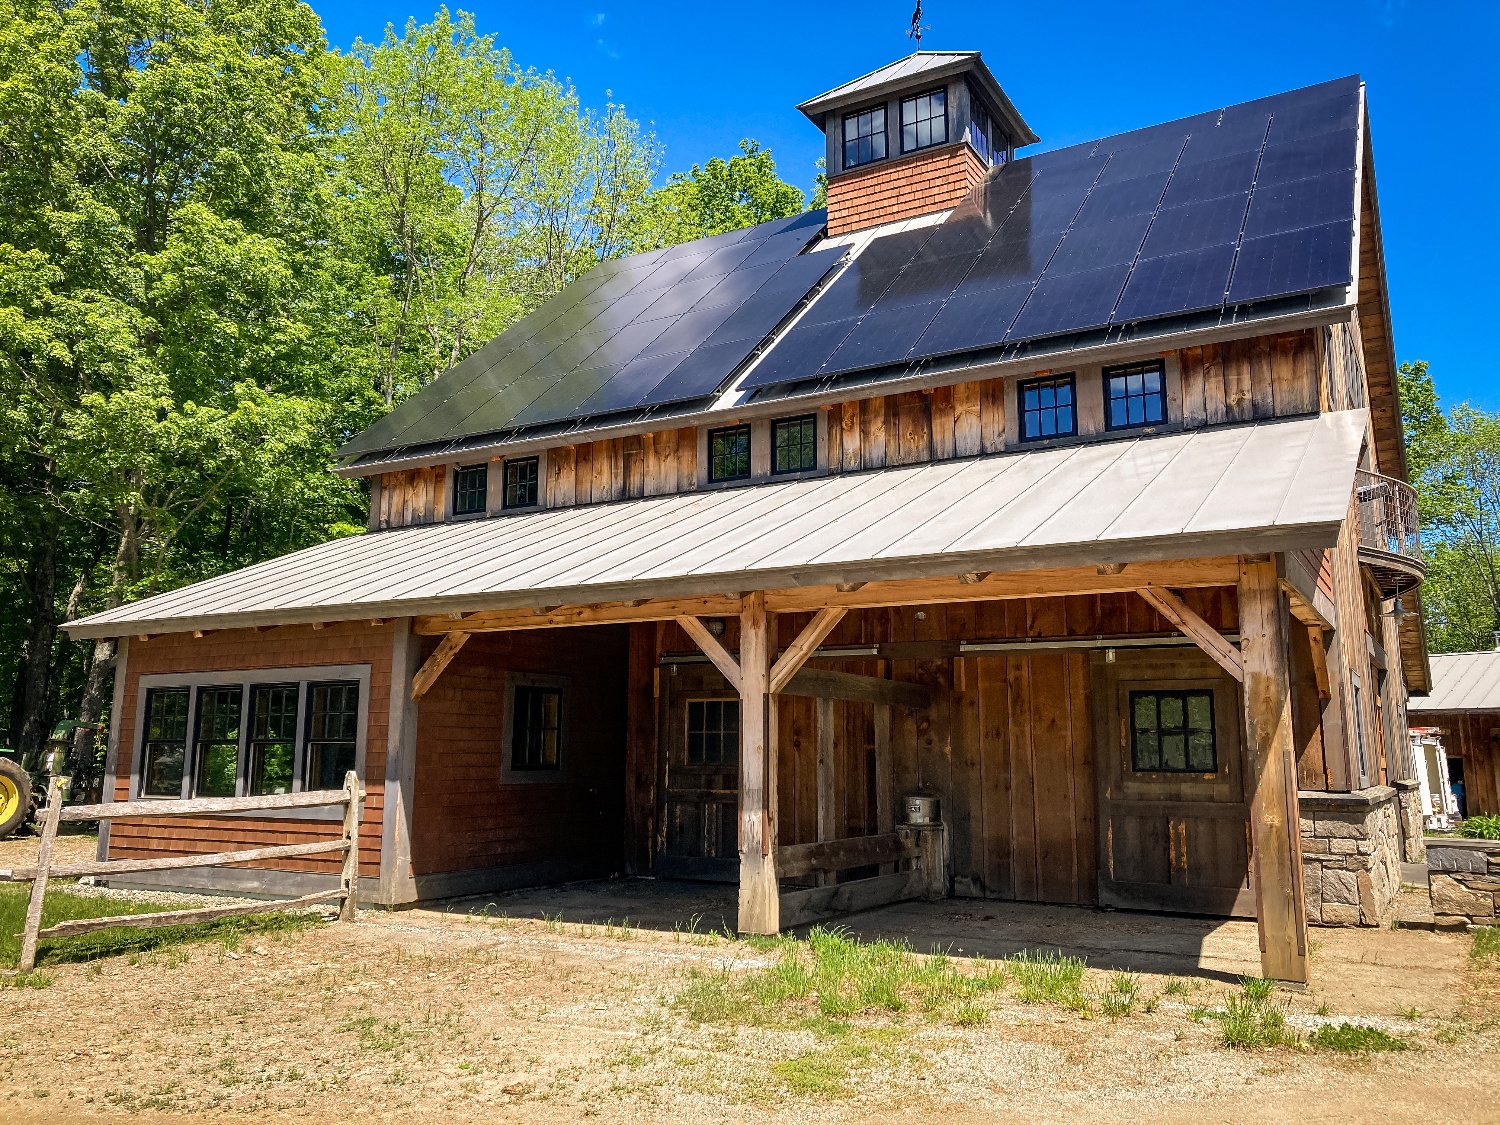 Solar installers building a solar carport in Vermont.